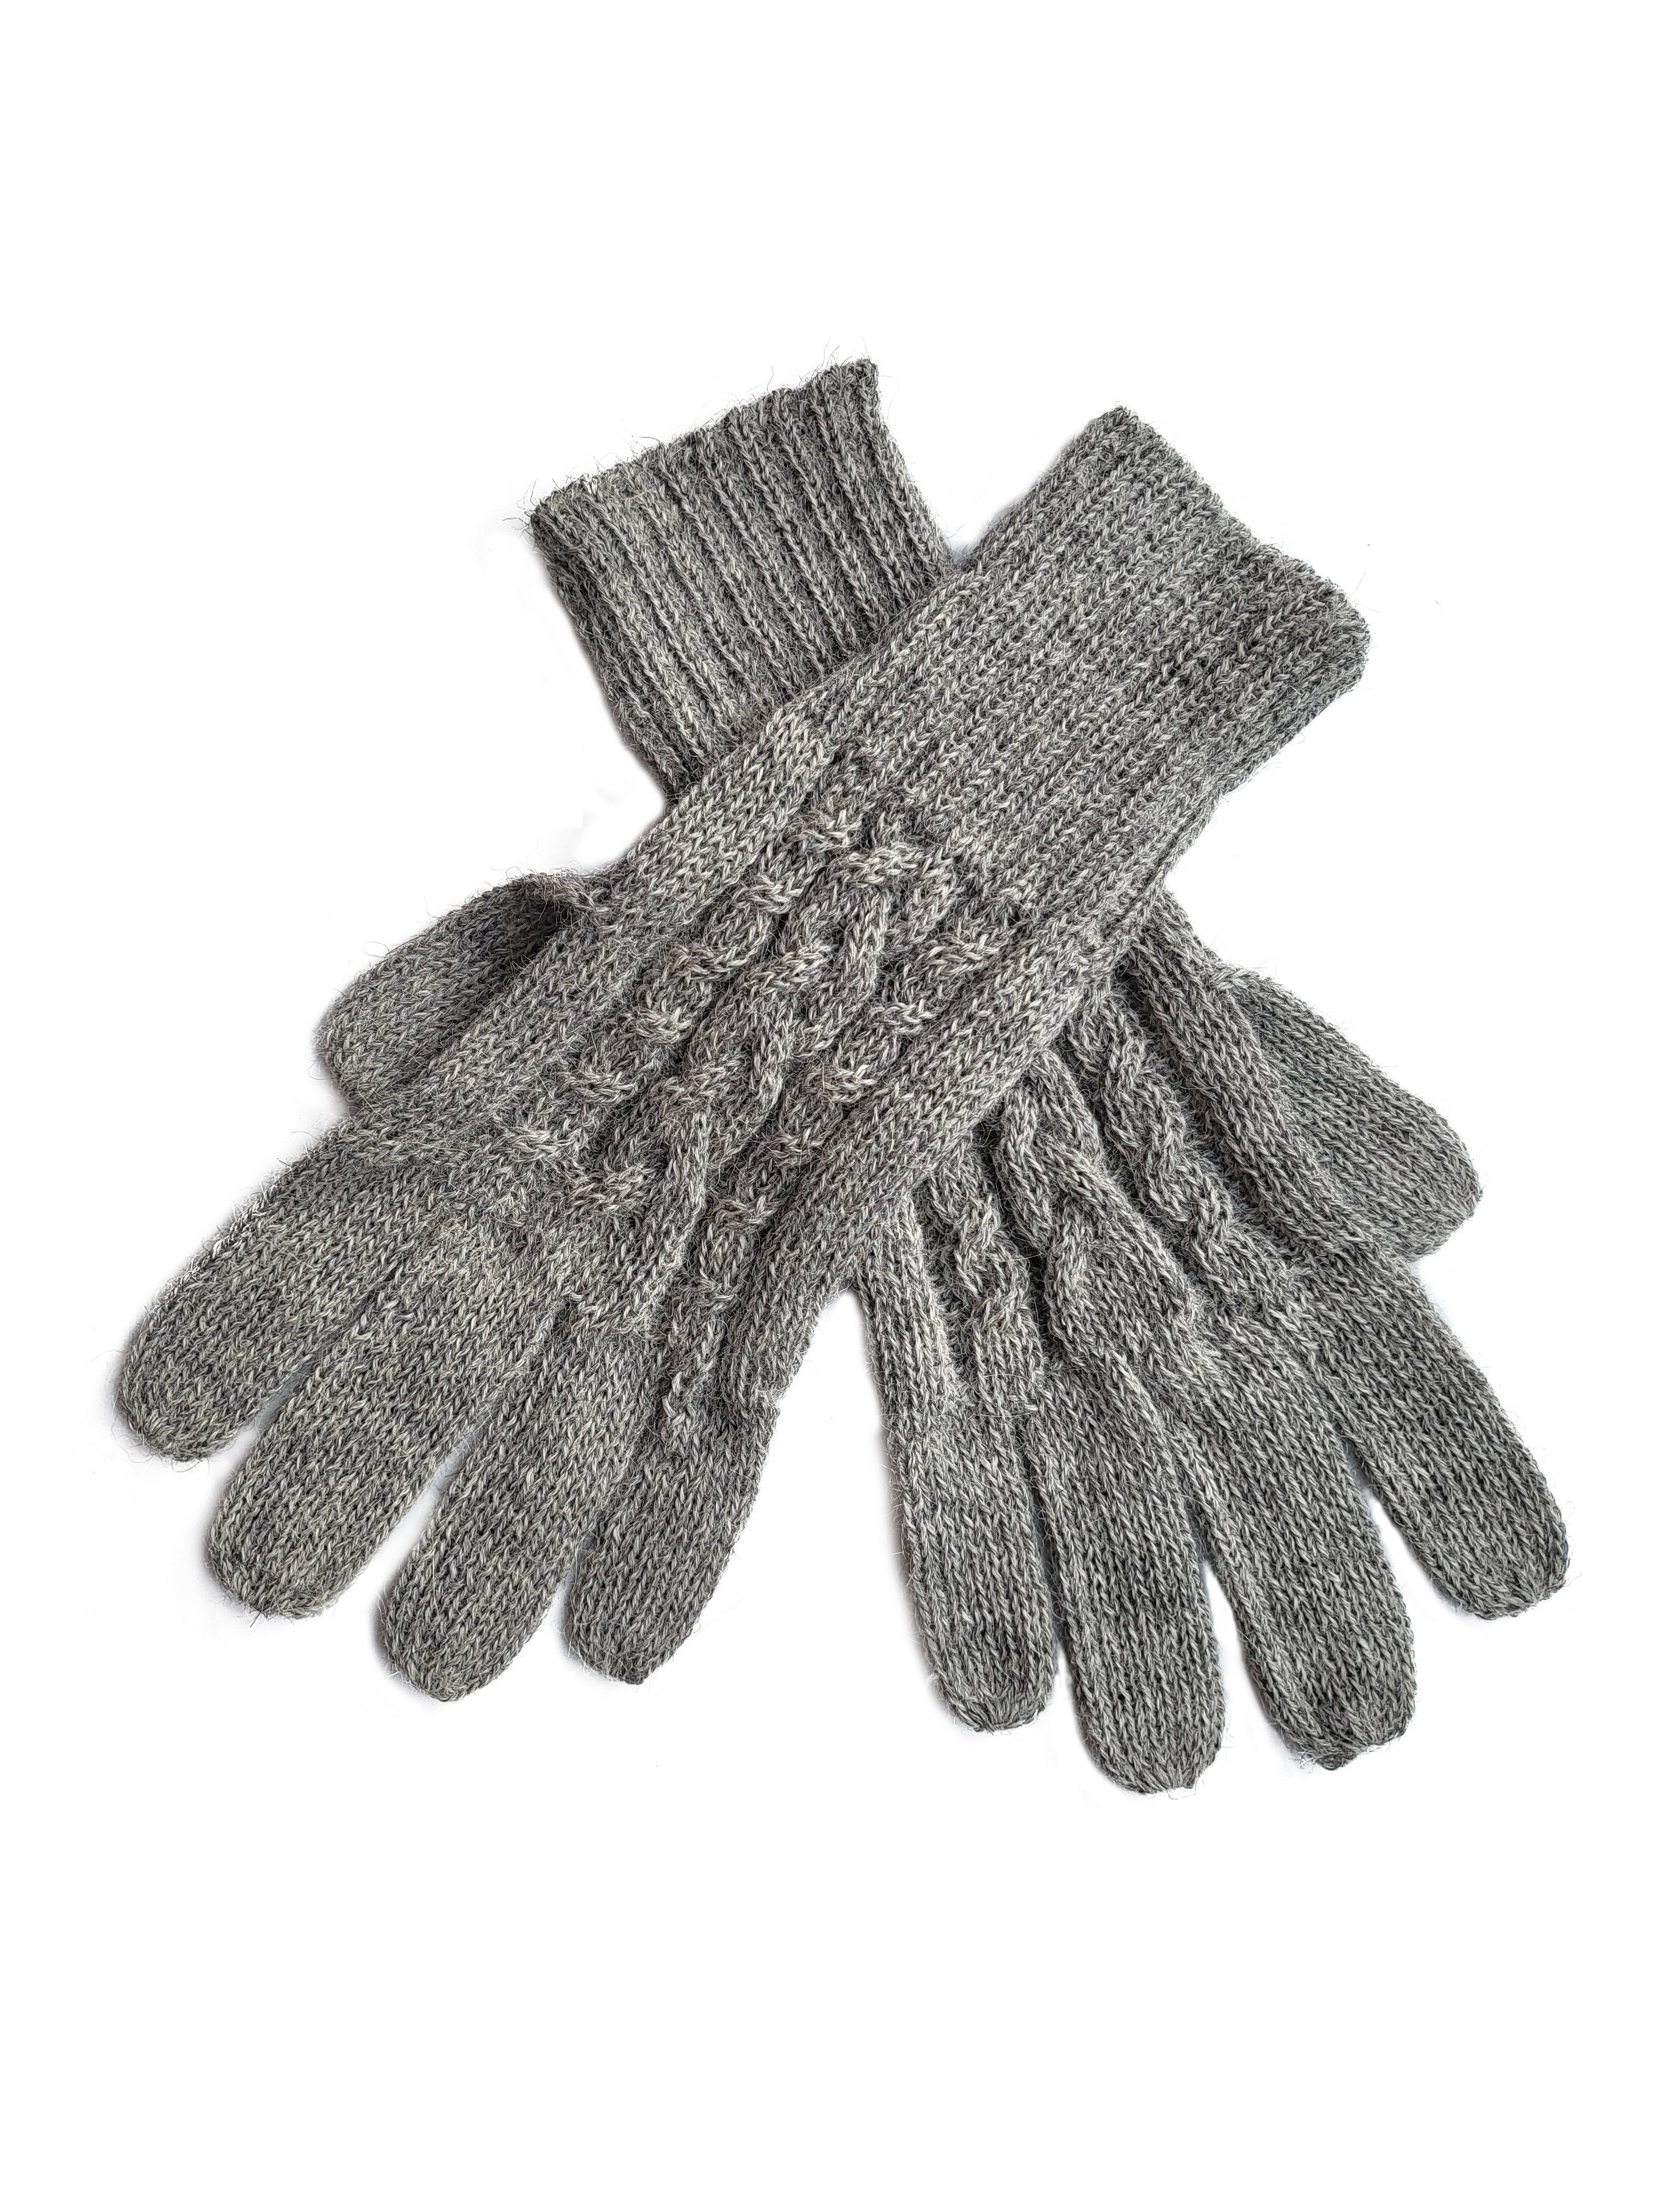 Posh Gear Strickhandschuhe Guantibrada Alpaka Fingerhandschuhe aus 100% Alpakawolle hell grau